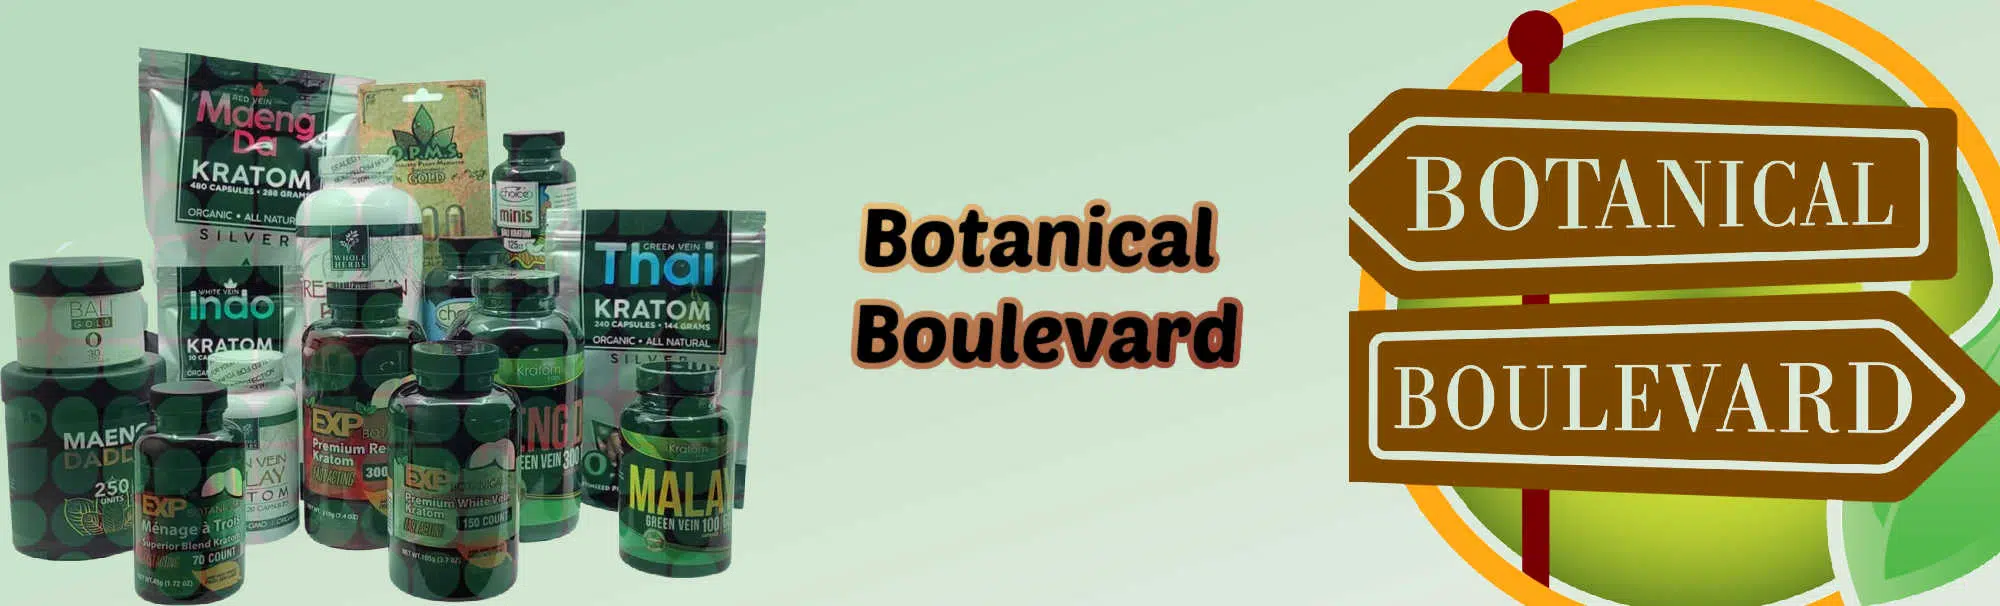 Botanical Boulevard product line display and logo